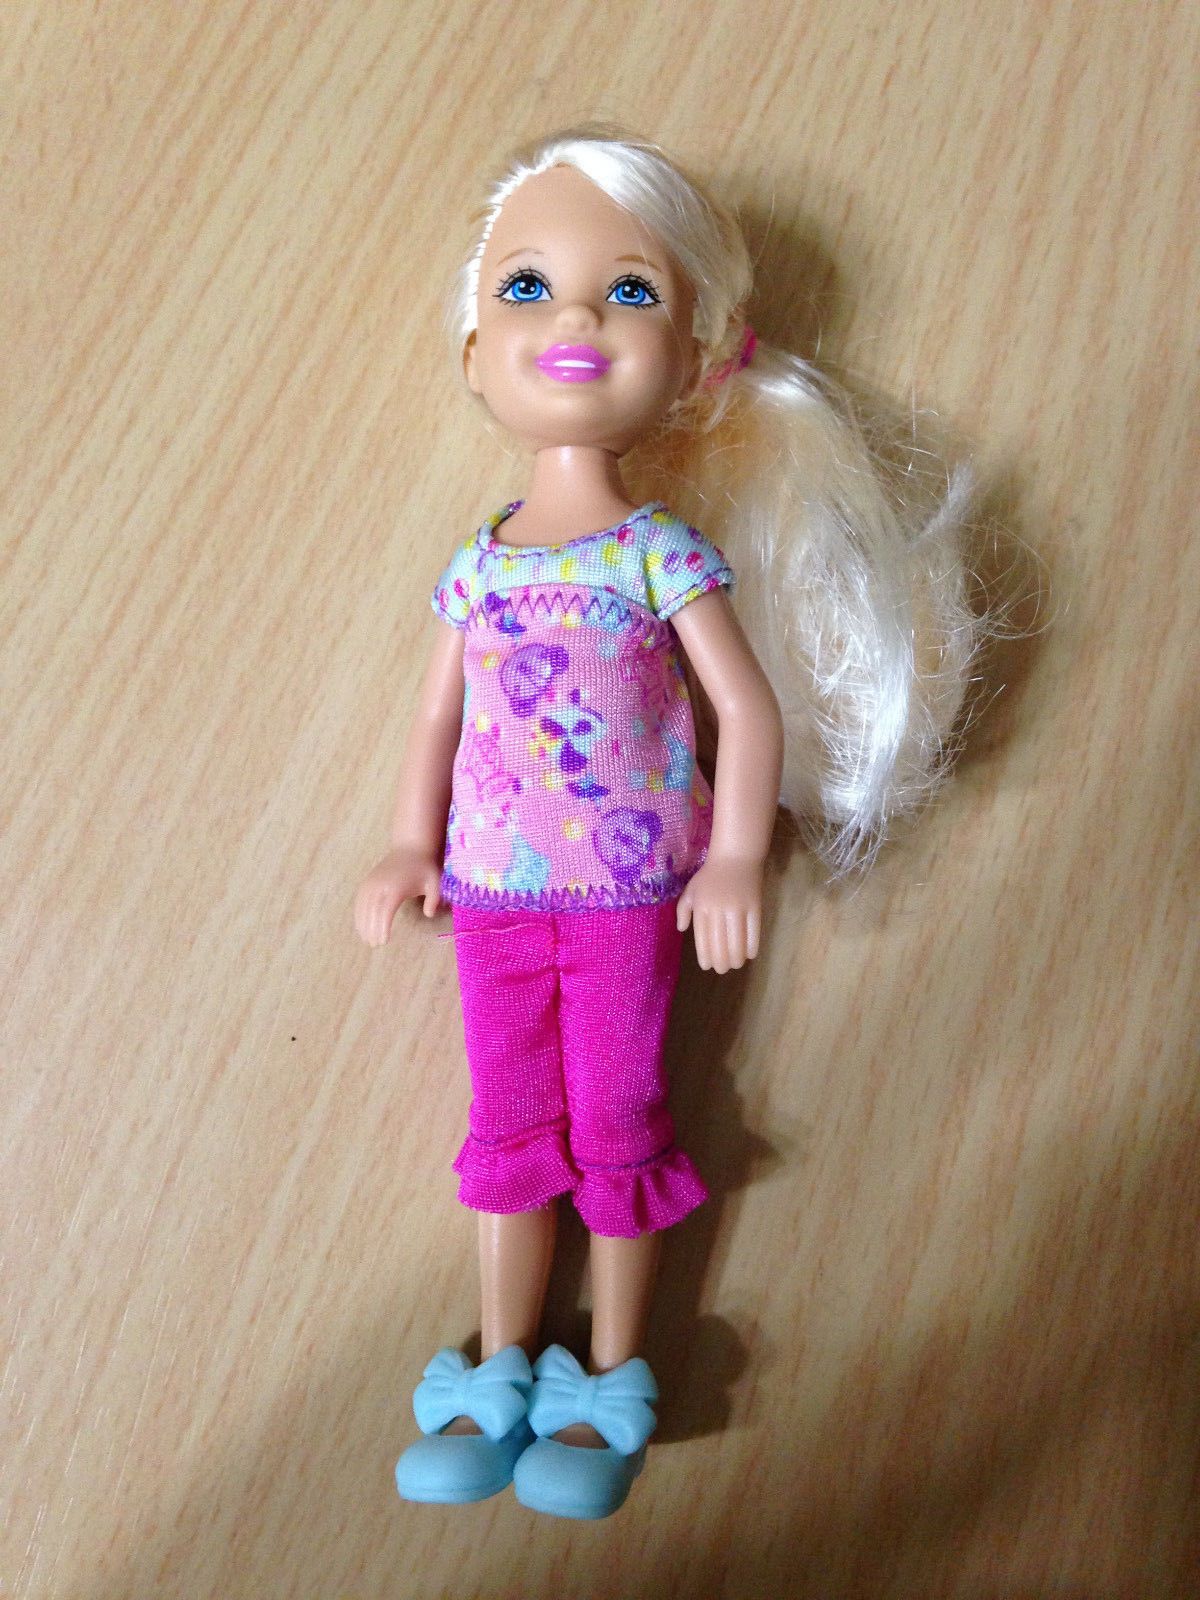 chelsea roberts barbie